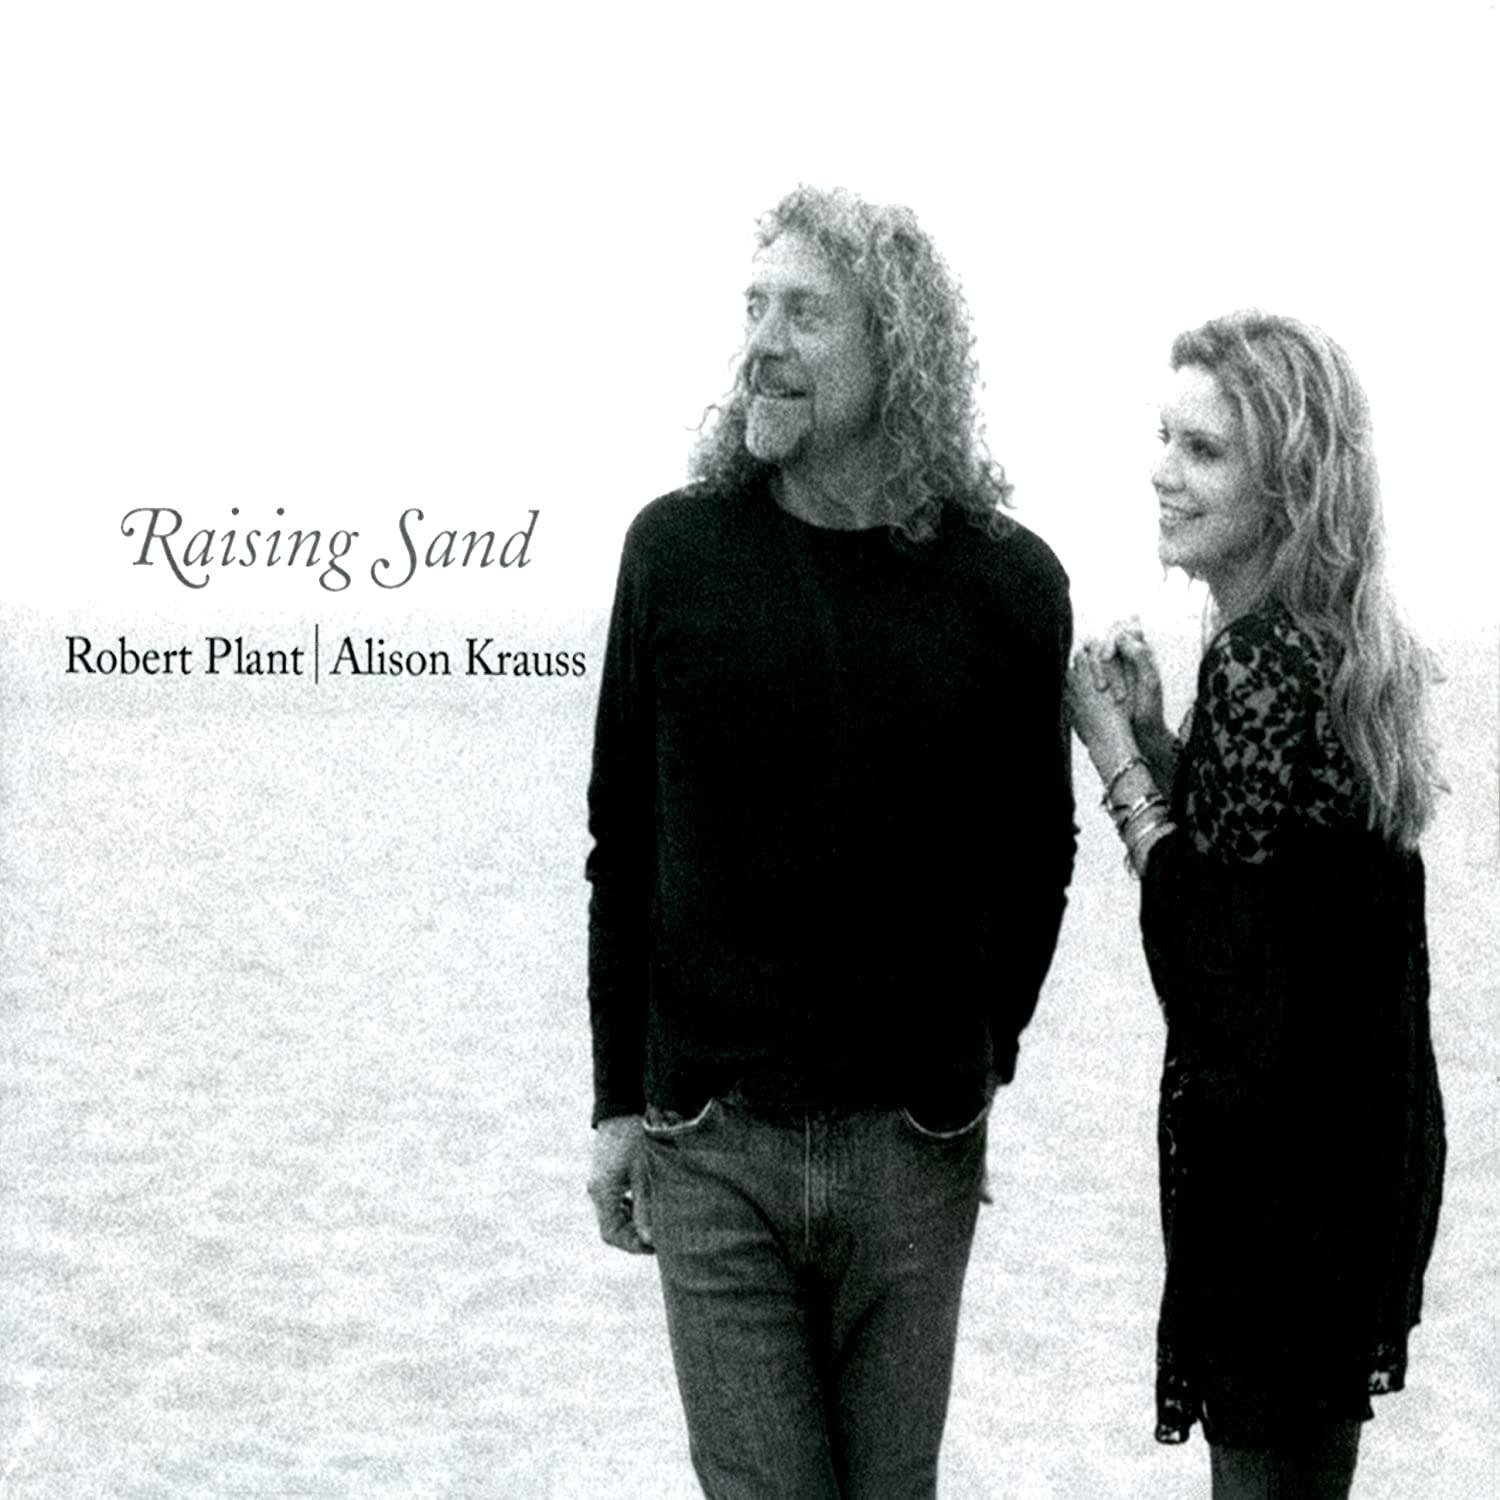 Robert Plant/Alison Krauss- Raising Sand - Darkside Records